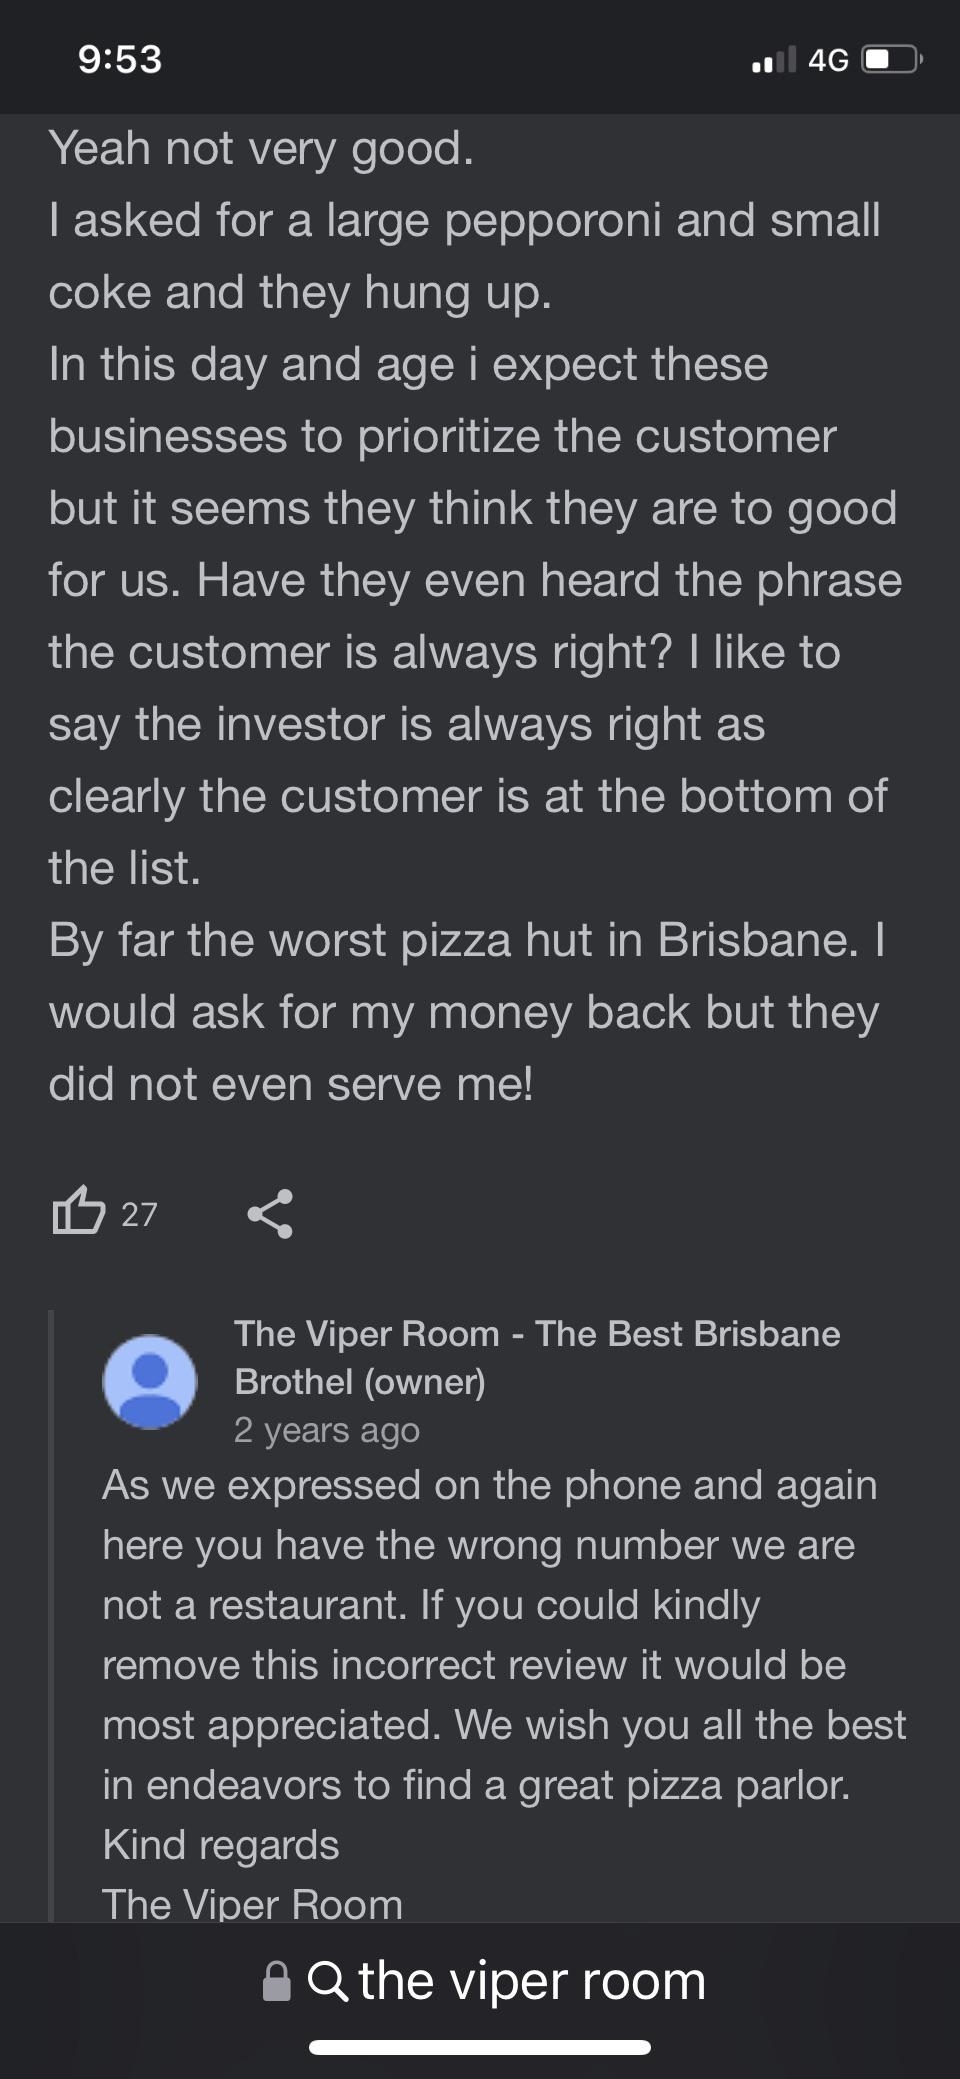 by far the worst Pizza Hut in Brisbane